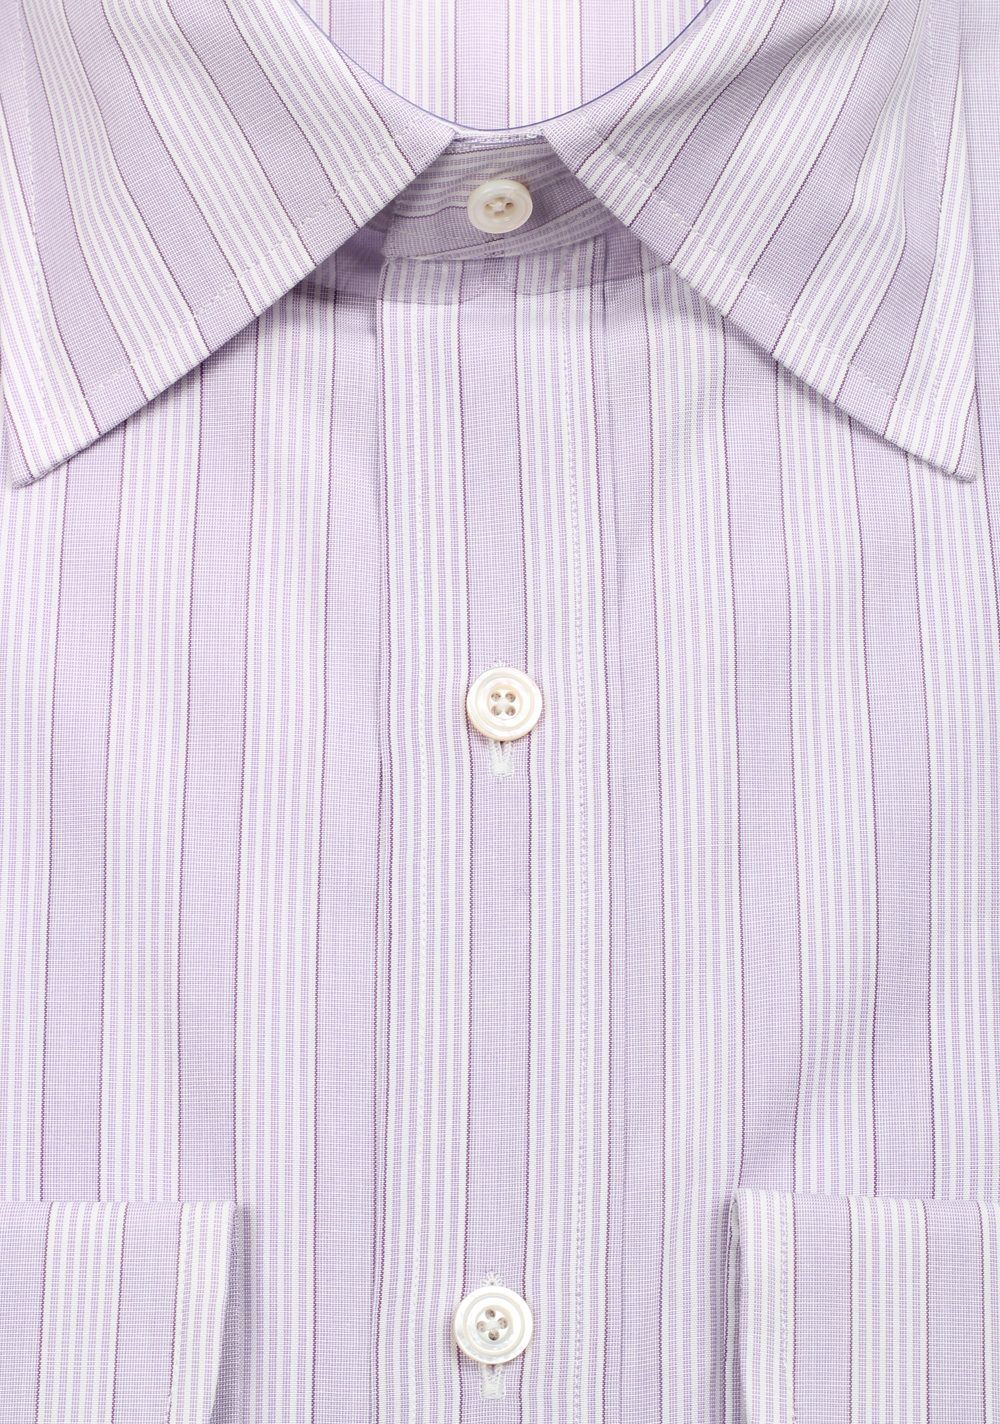 TOM FORD Striped Purple High Collar Dress Shirt Size 40 / 15,75 U.S. | Costume Limité